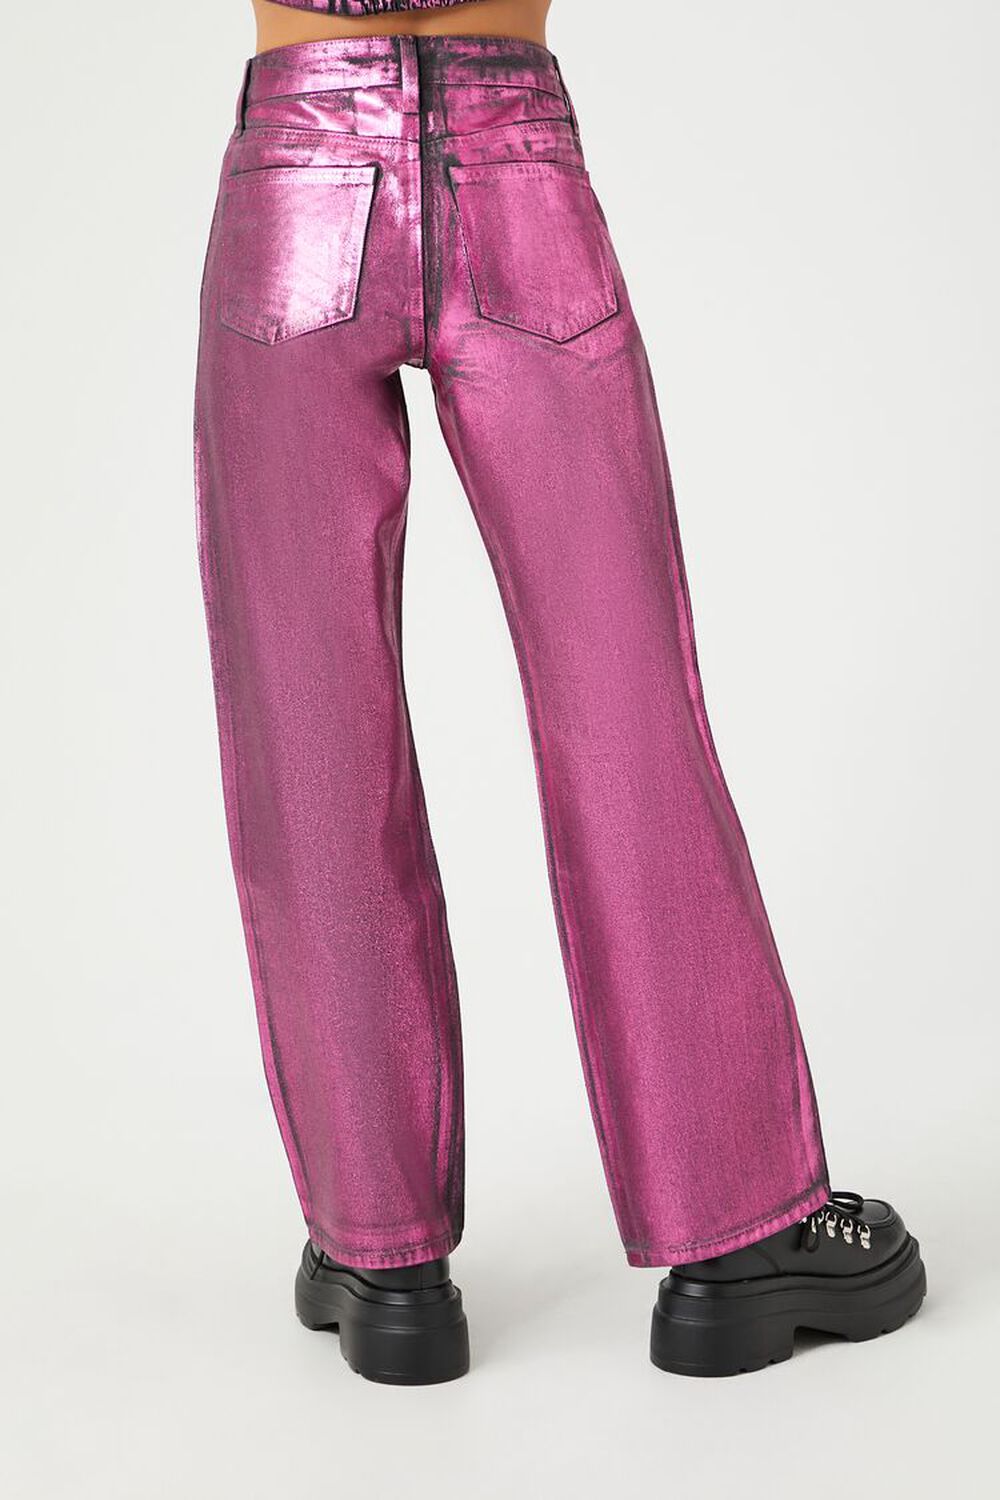 Aonoapll Shiny Metallic Jeans for Women Straight Wide Leg Denim